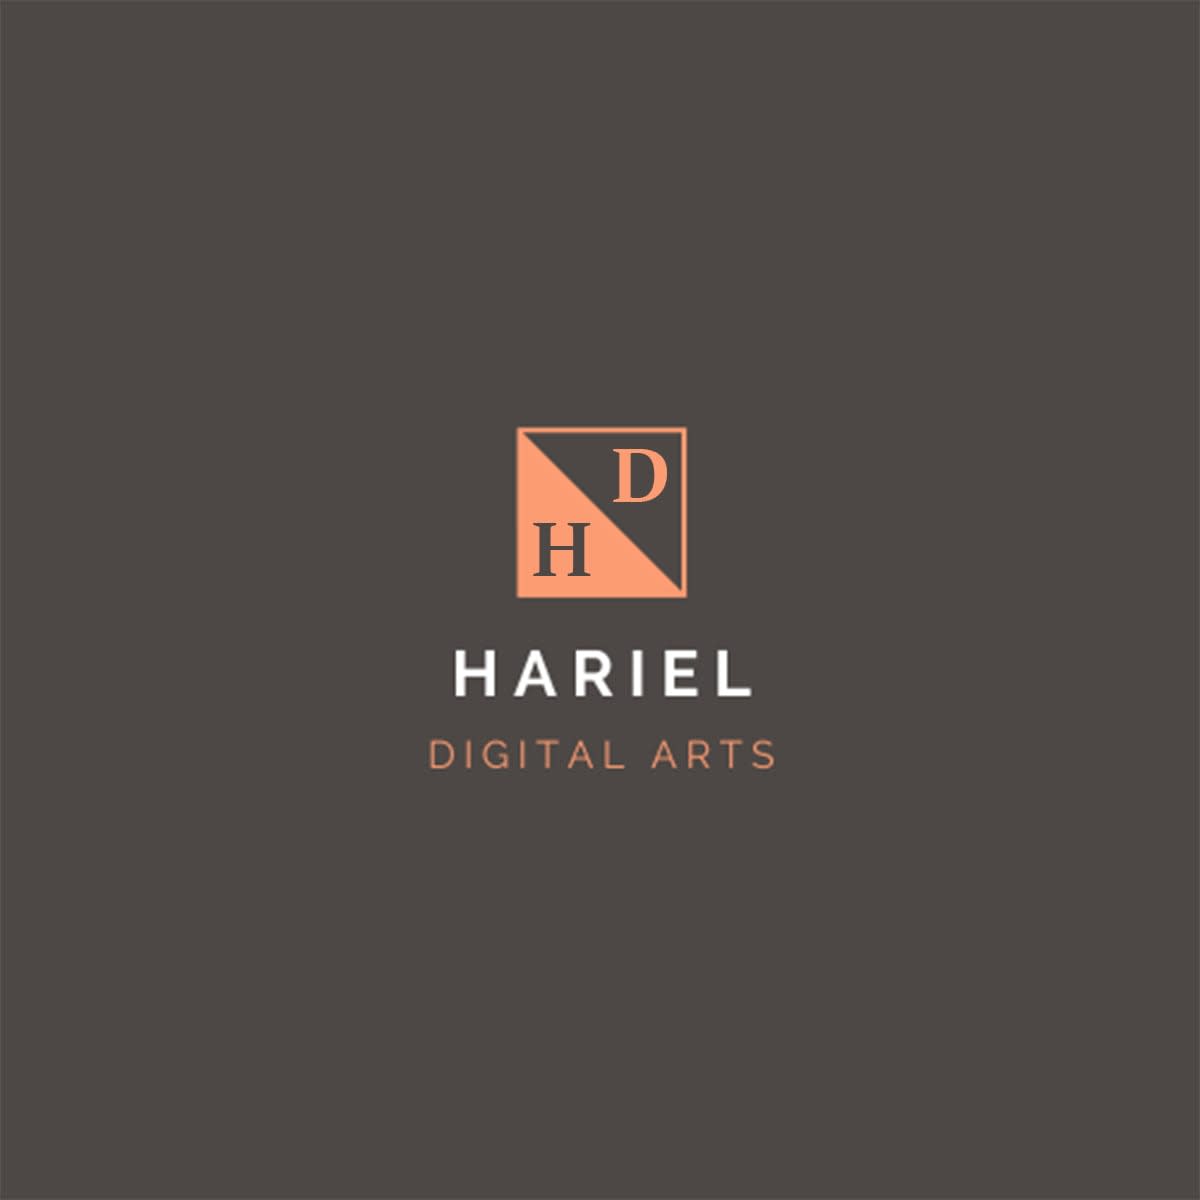 Hariel Digital Arts